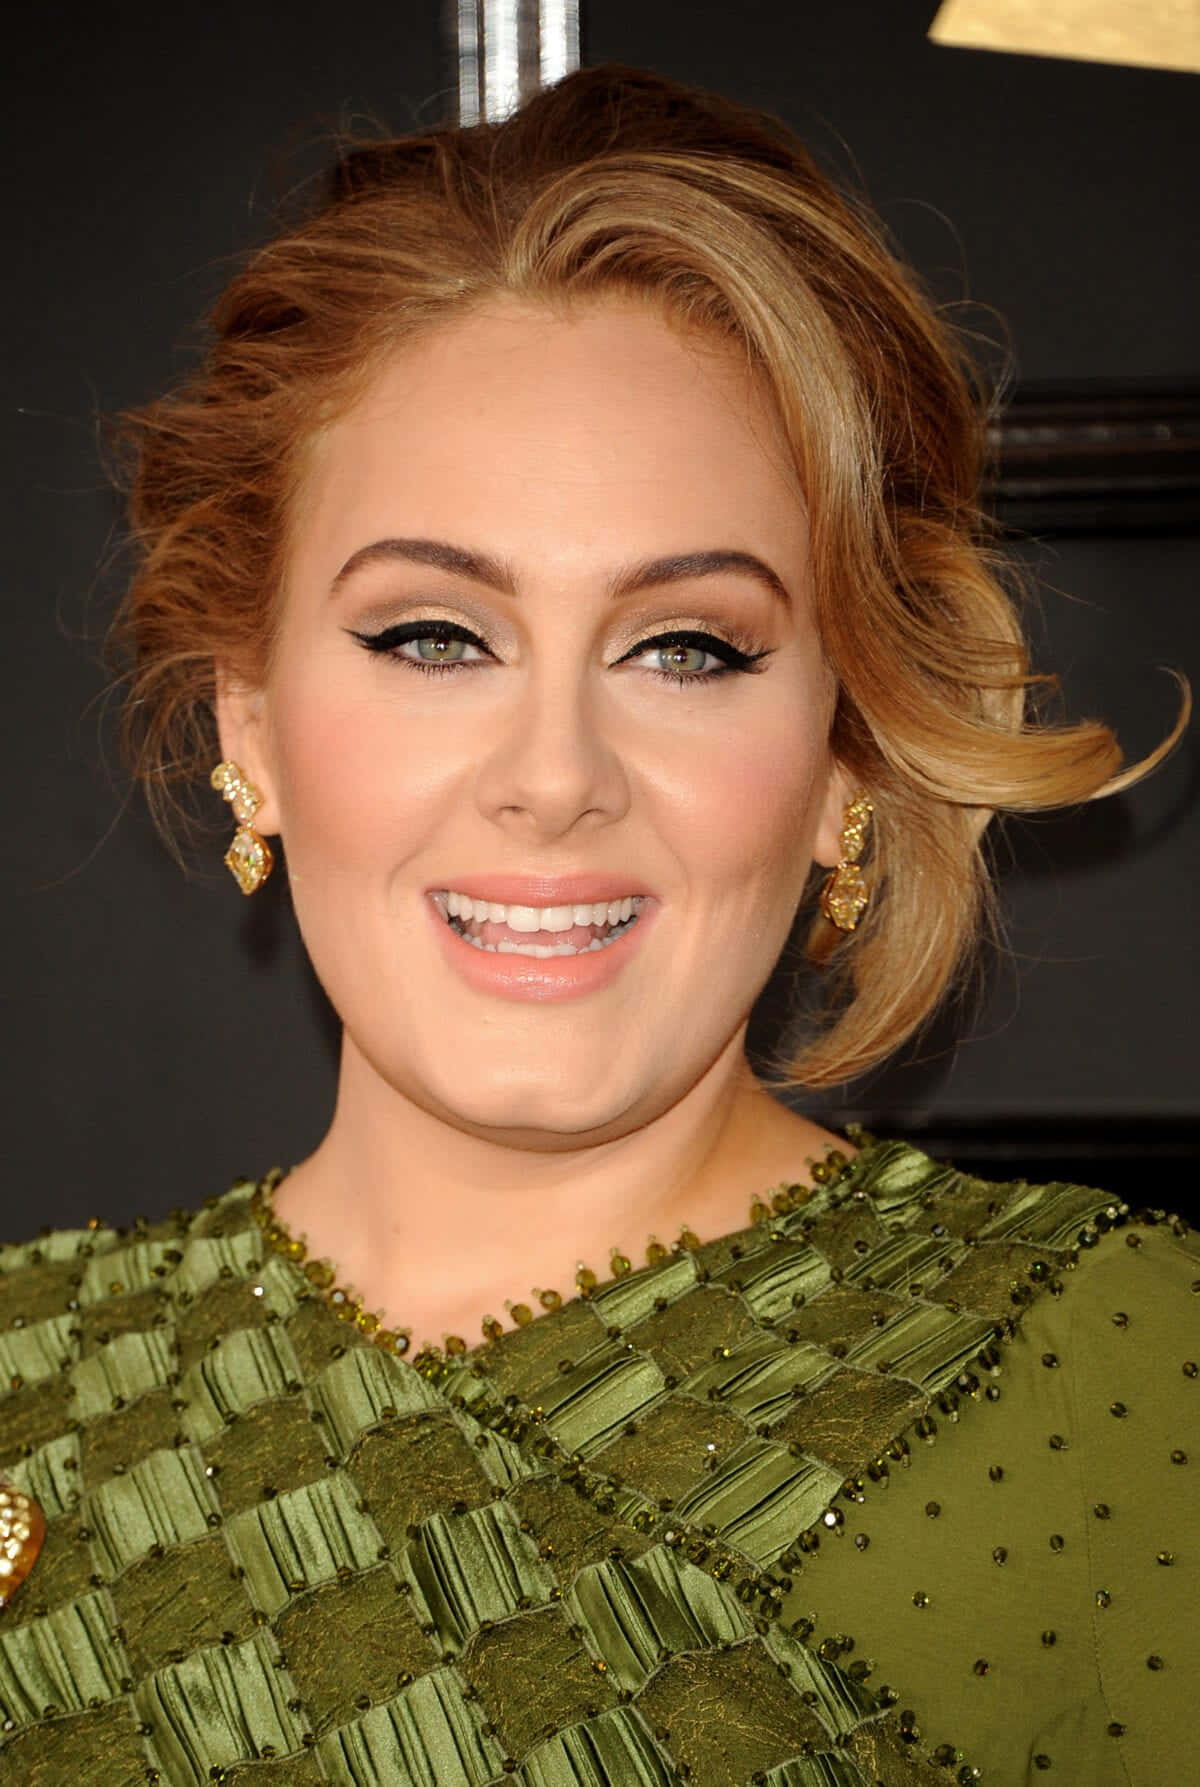 Adelepå Den 64:e Årliga Grammy Awards